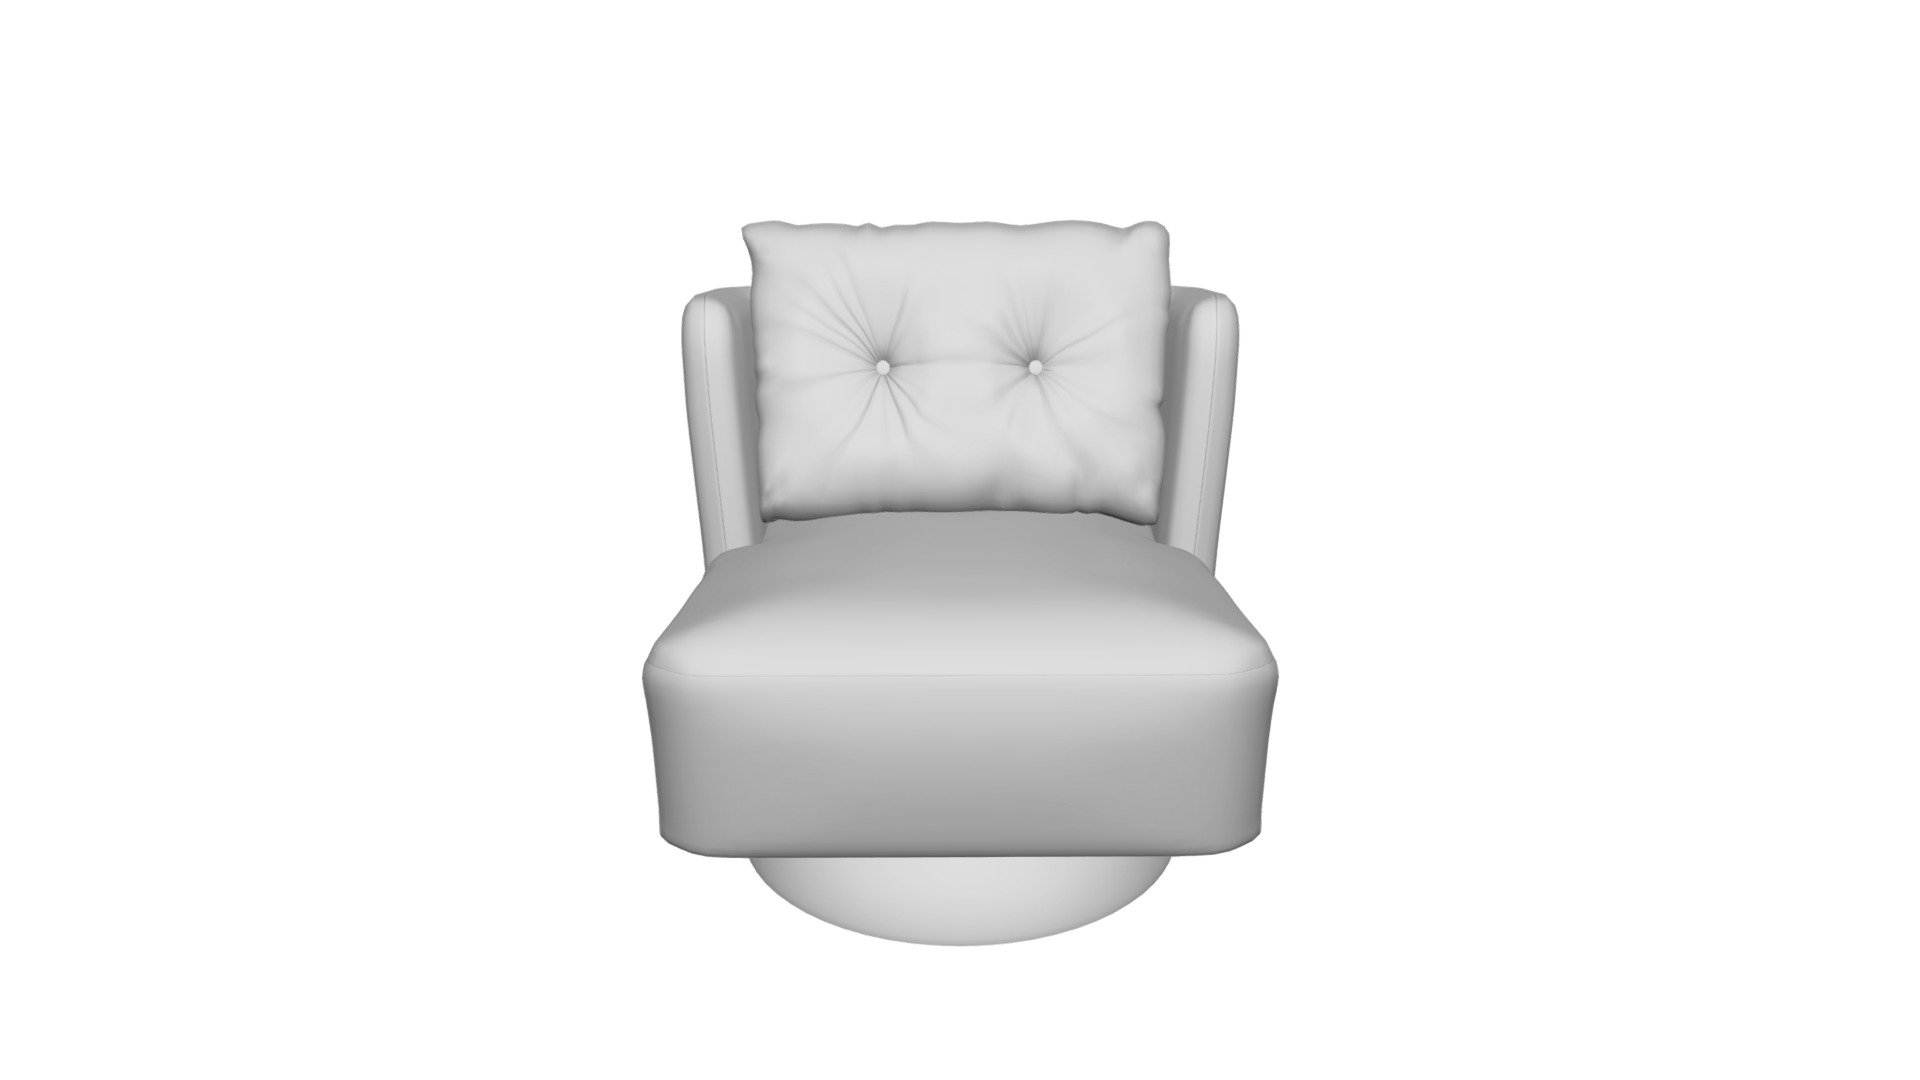 Chair Alma Blue Dg Home 3d Model By Dg 810d78f Sketchfab 